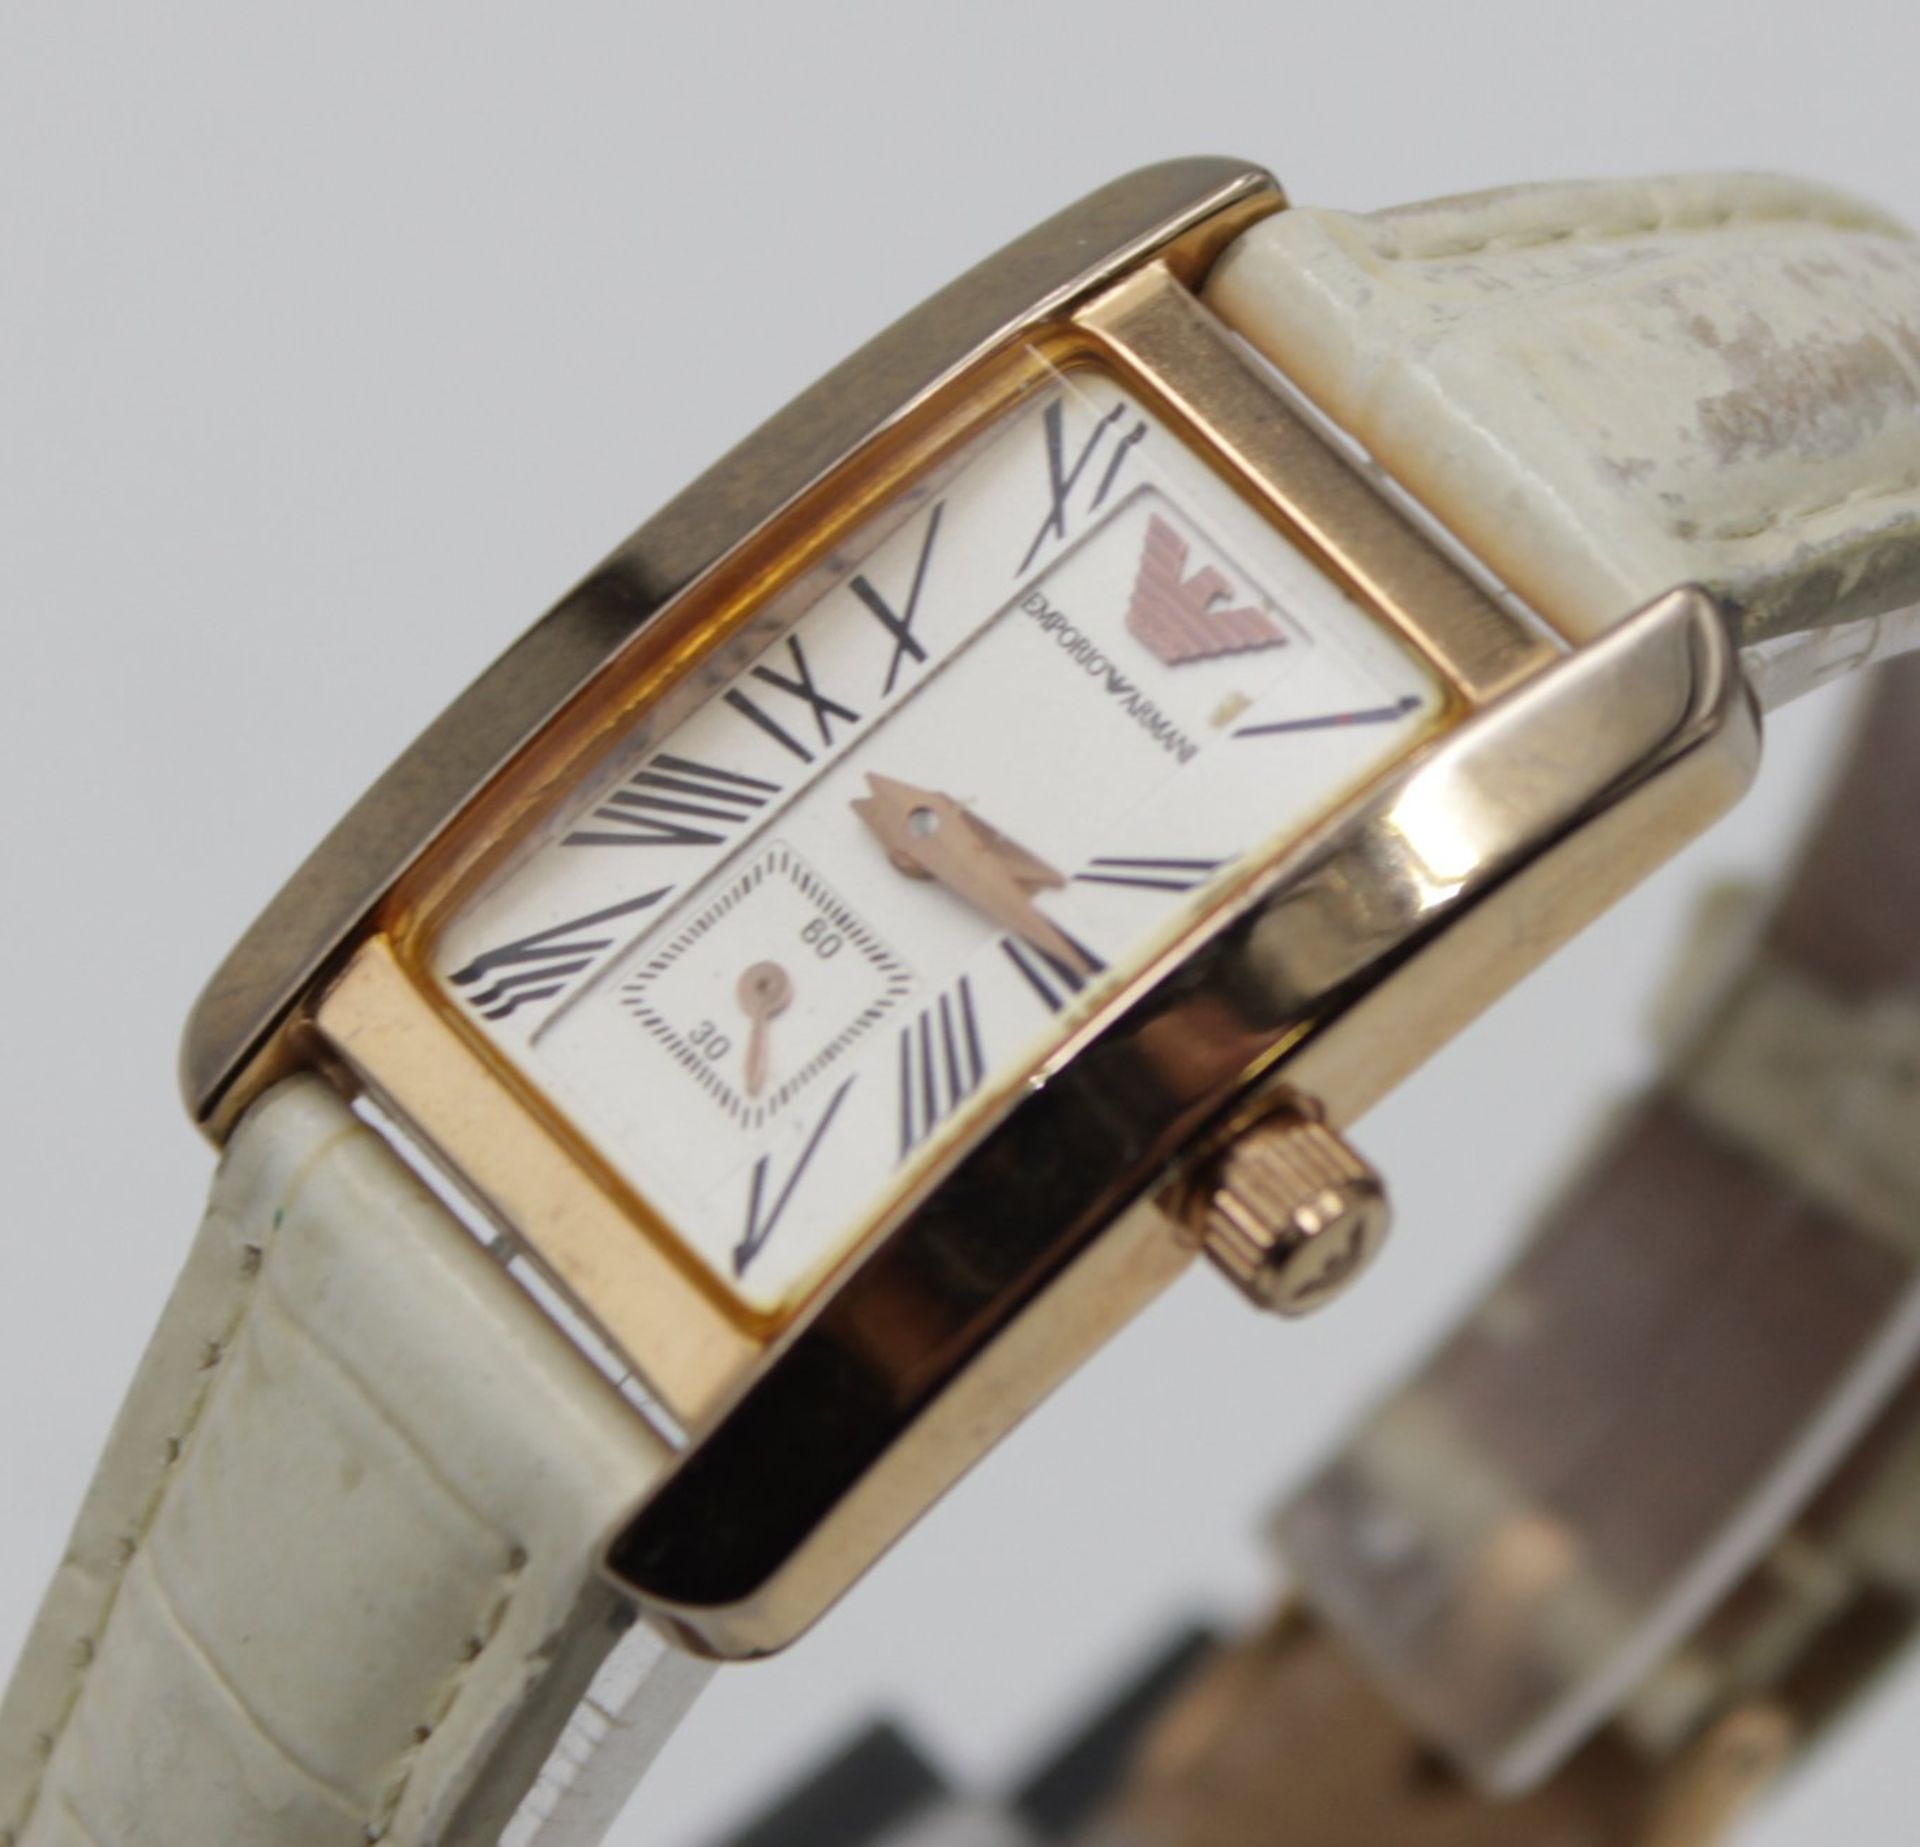 Damen-Armbanduhr, Emporio Armani, Quarz, Armband mit Tragespuren, anbei orig. Etui, ca. 2 x 3cm. - Bild 5 aus 6